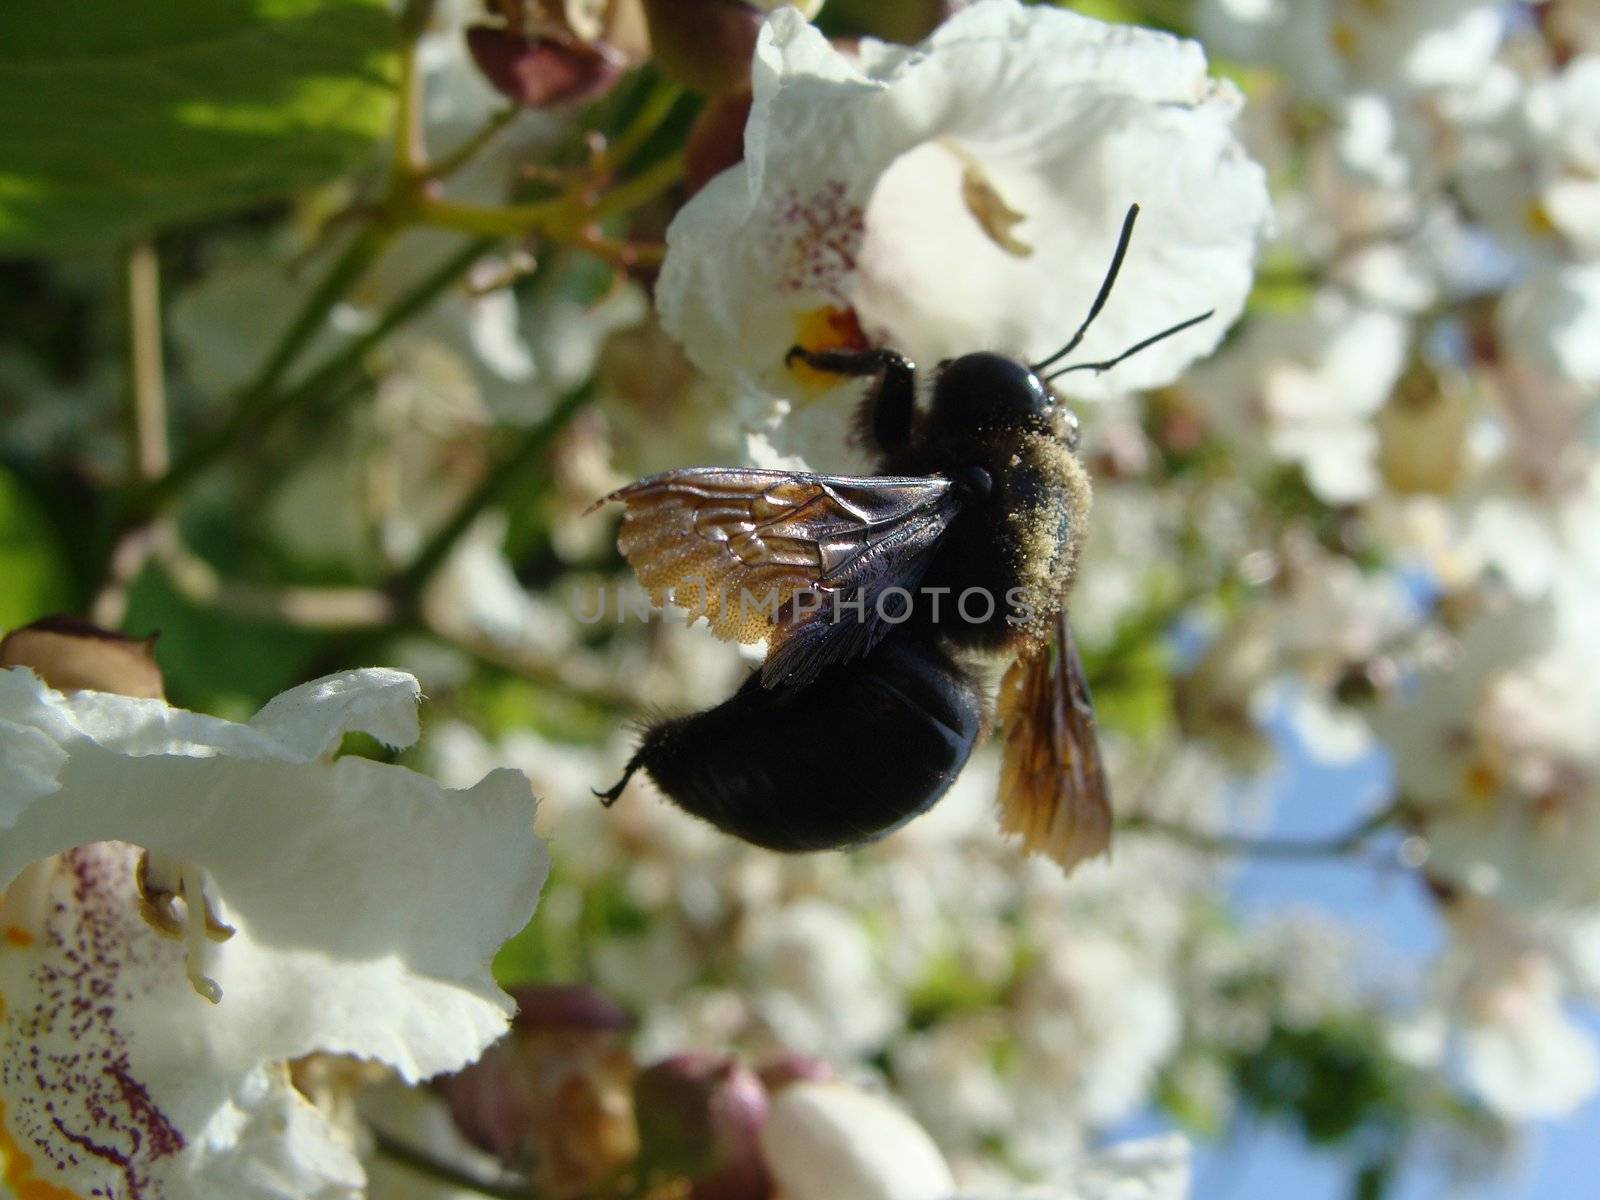 Big bumblebee on white flower summer day